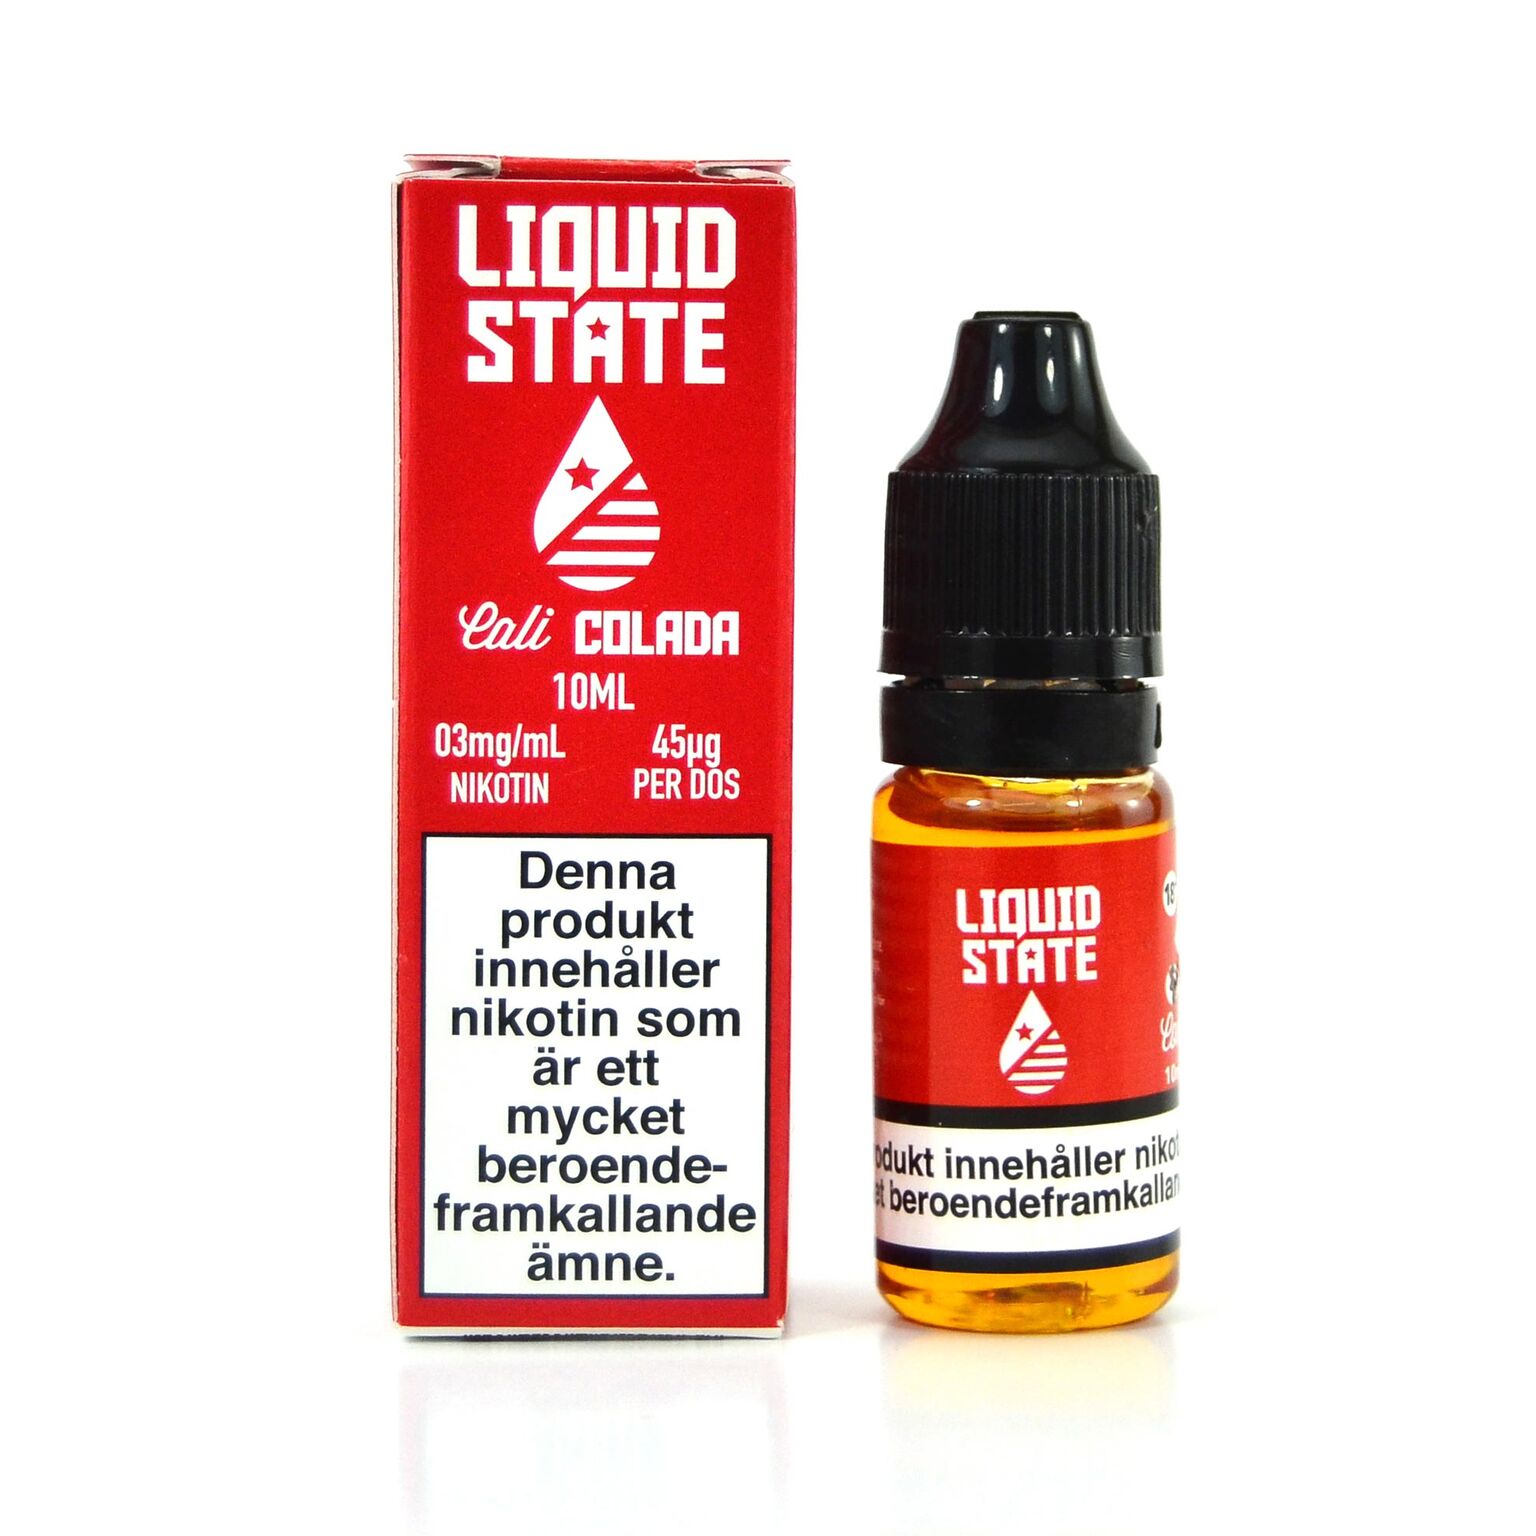 Liquid State Cali Colada e-juice with nicotine